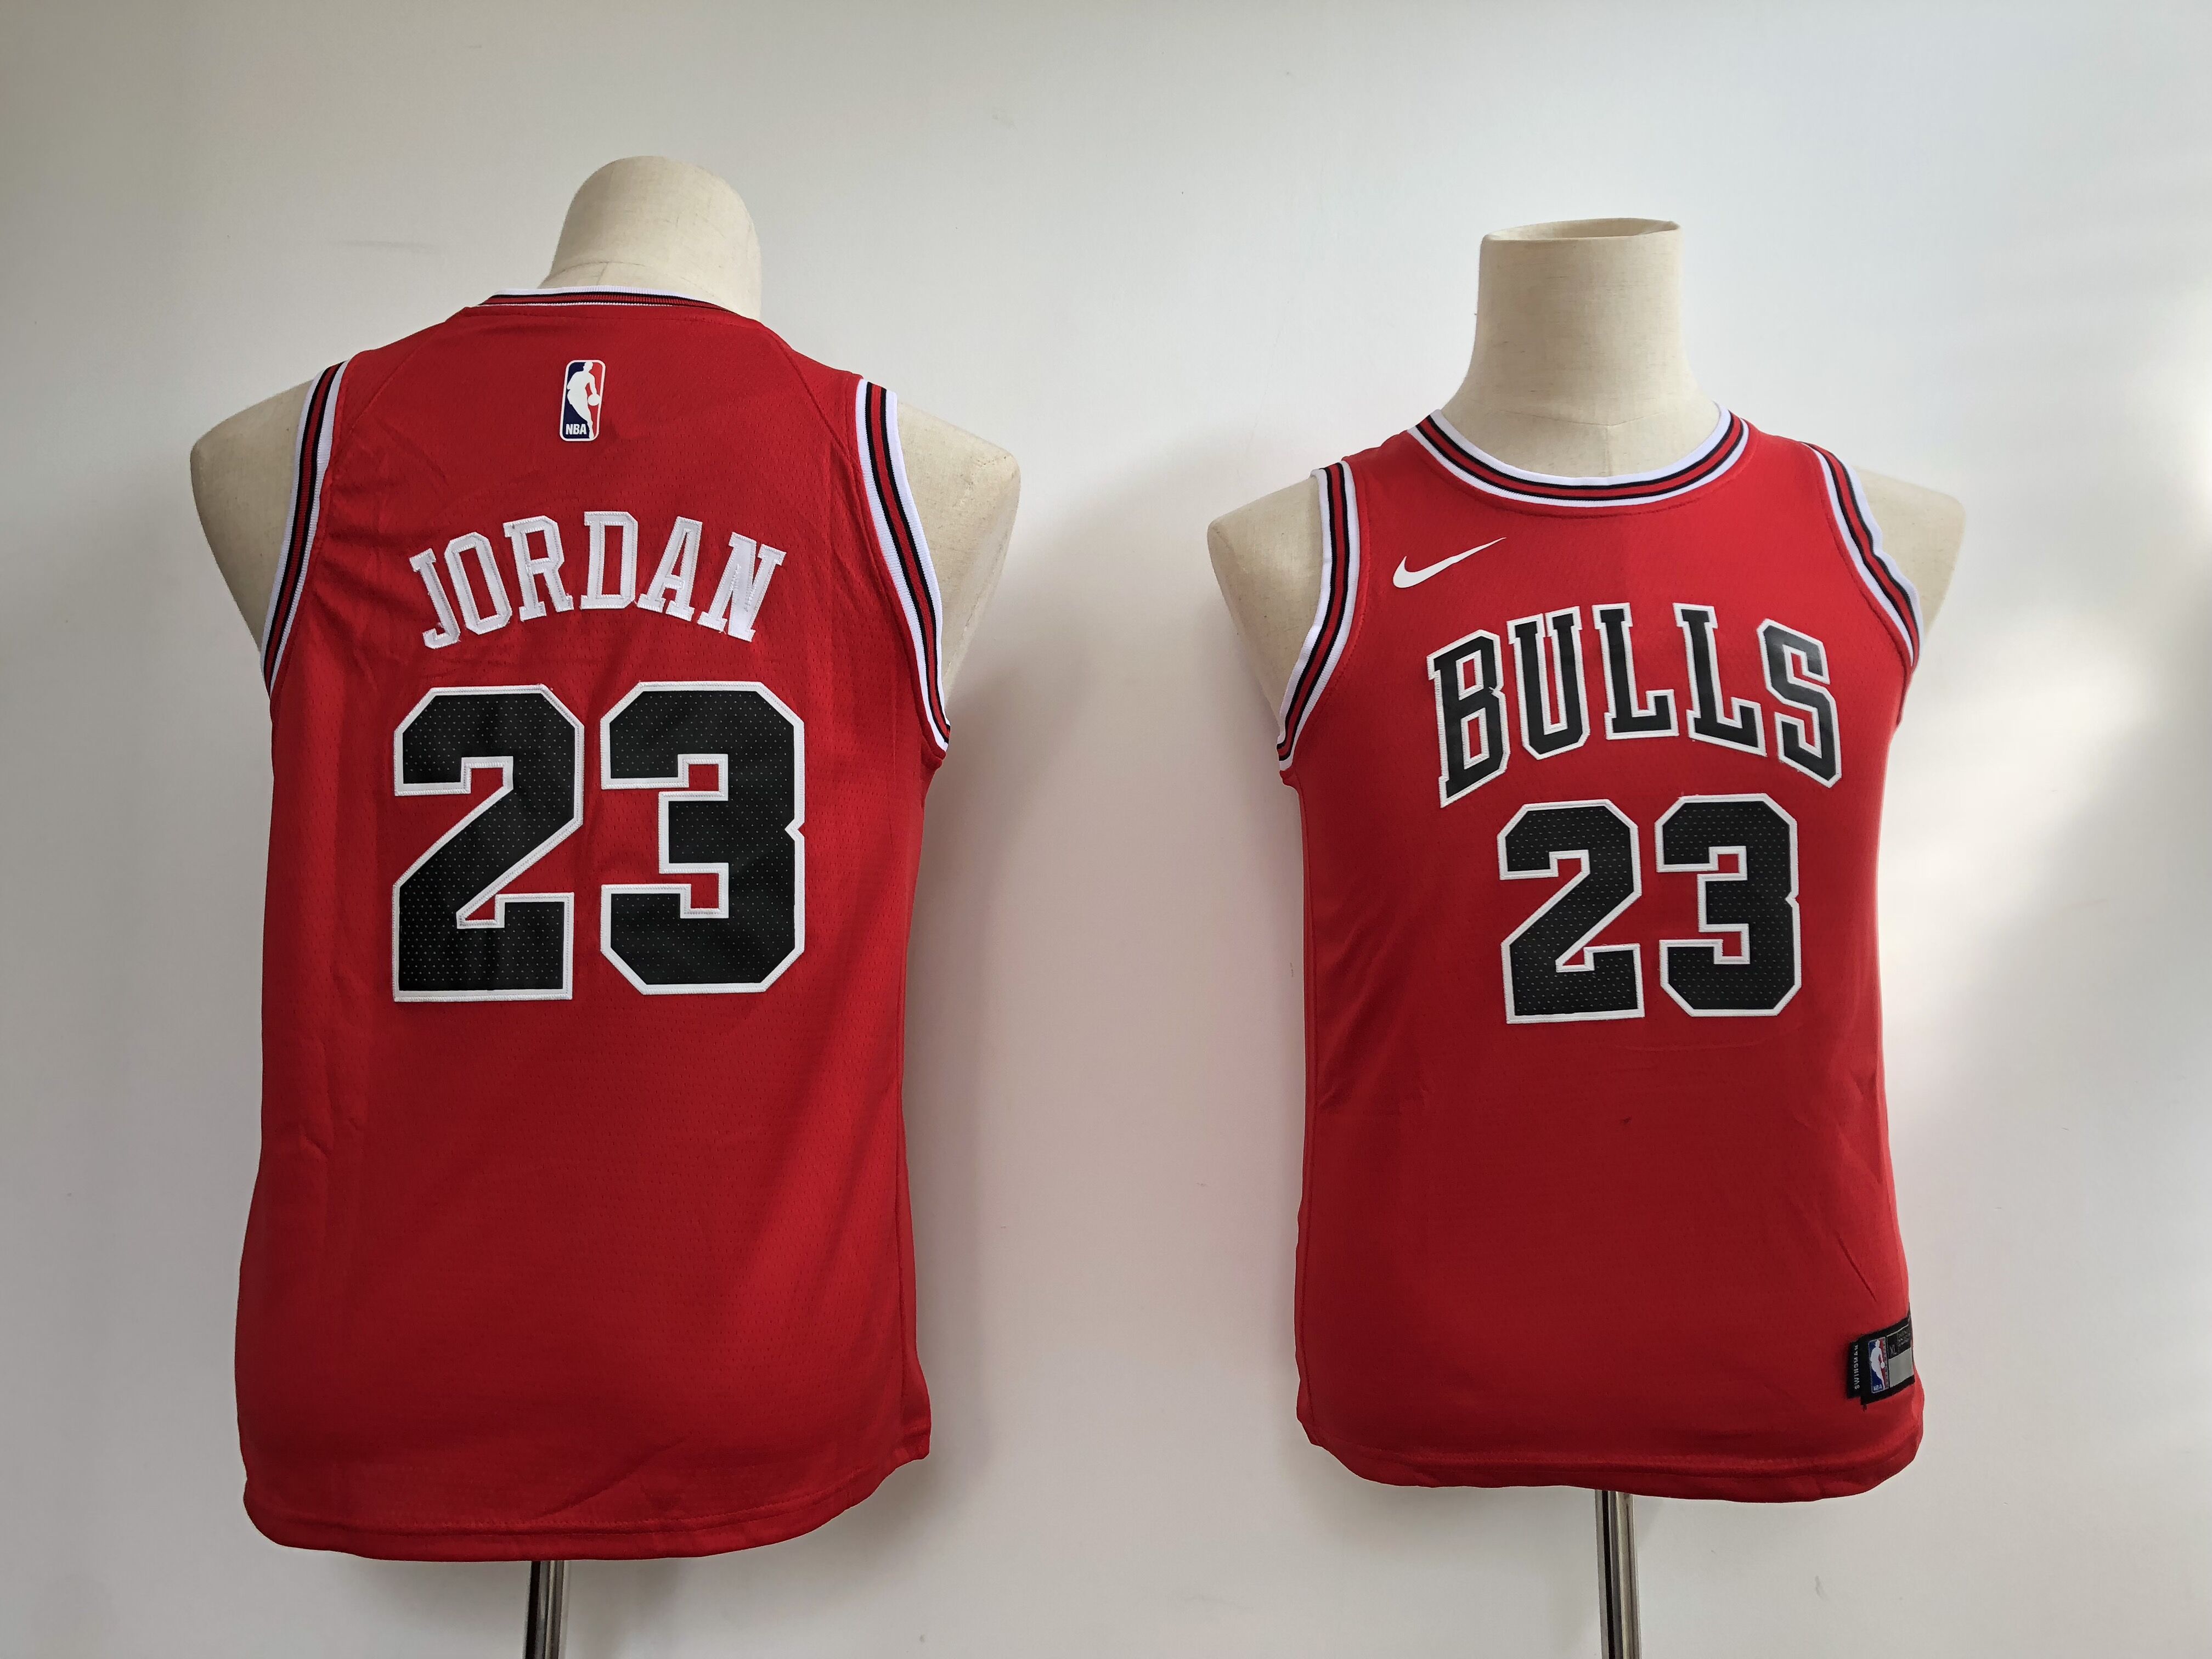 Youth Chicago Bulls #23 Jordan red Nike NBA Jerseys